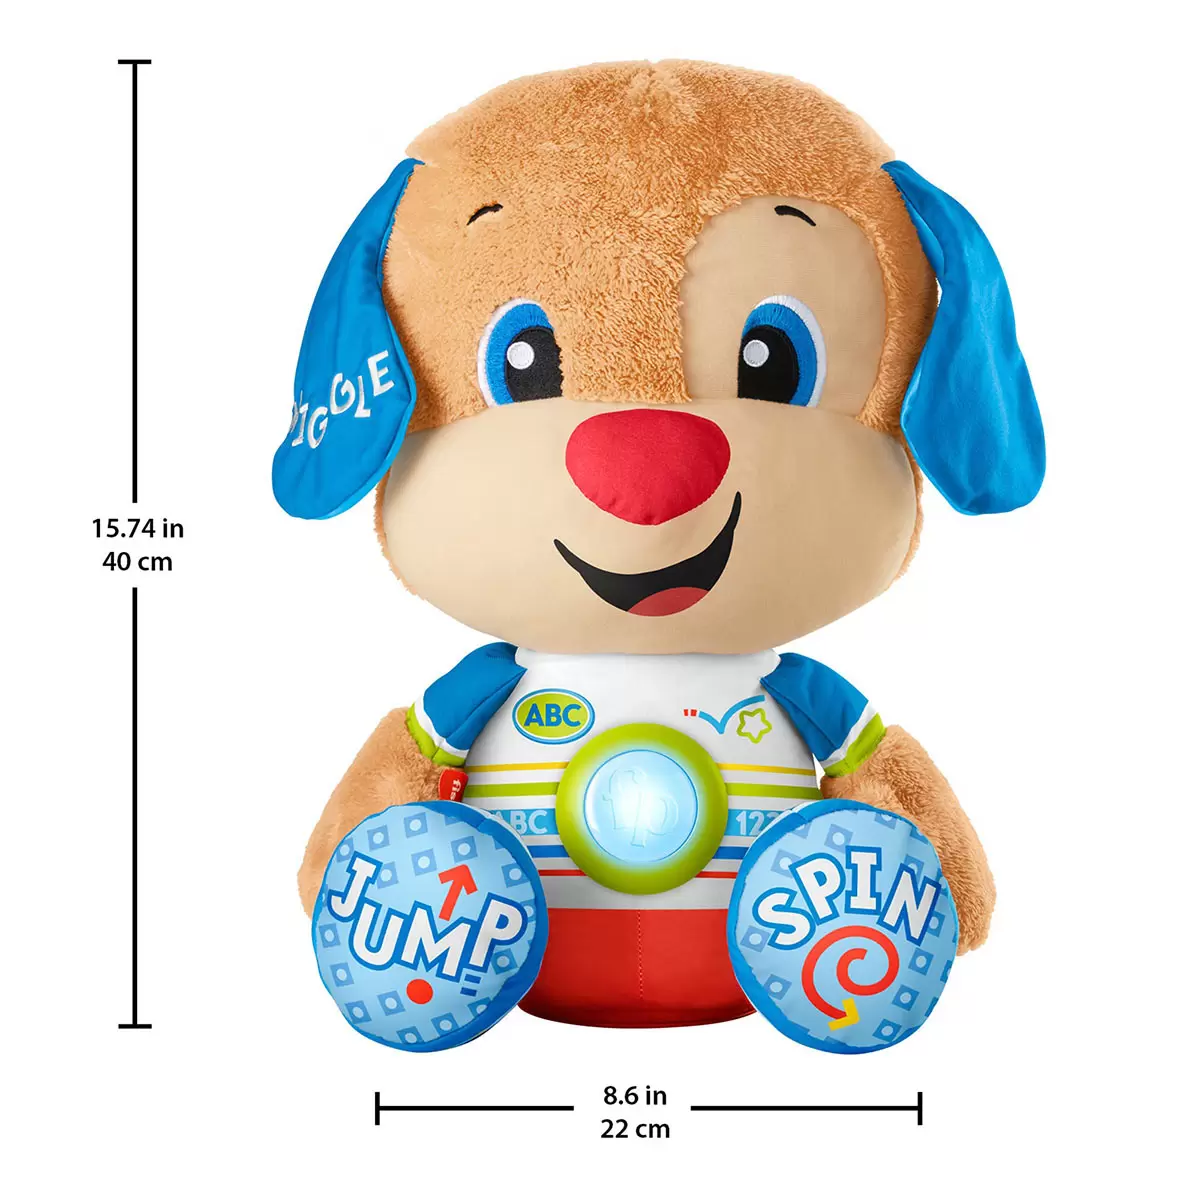 Buy So Big Puppy Dimensions Image at Costco.co.uk